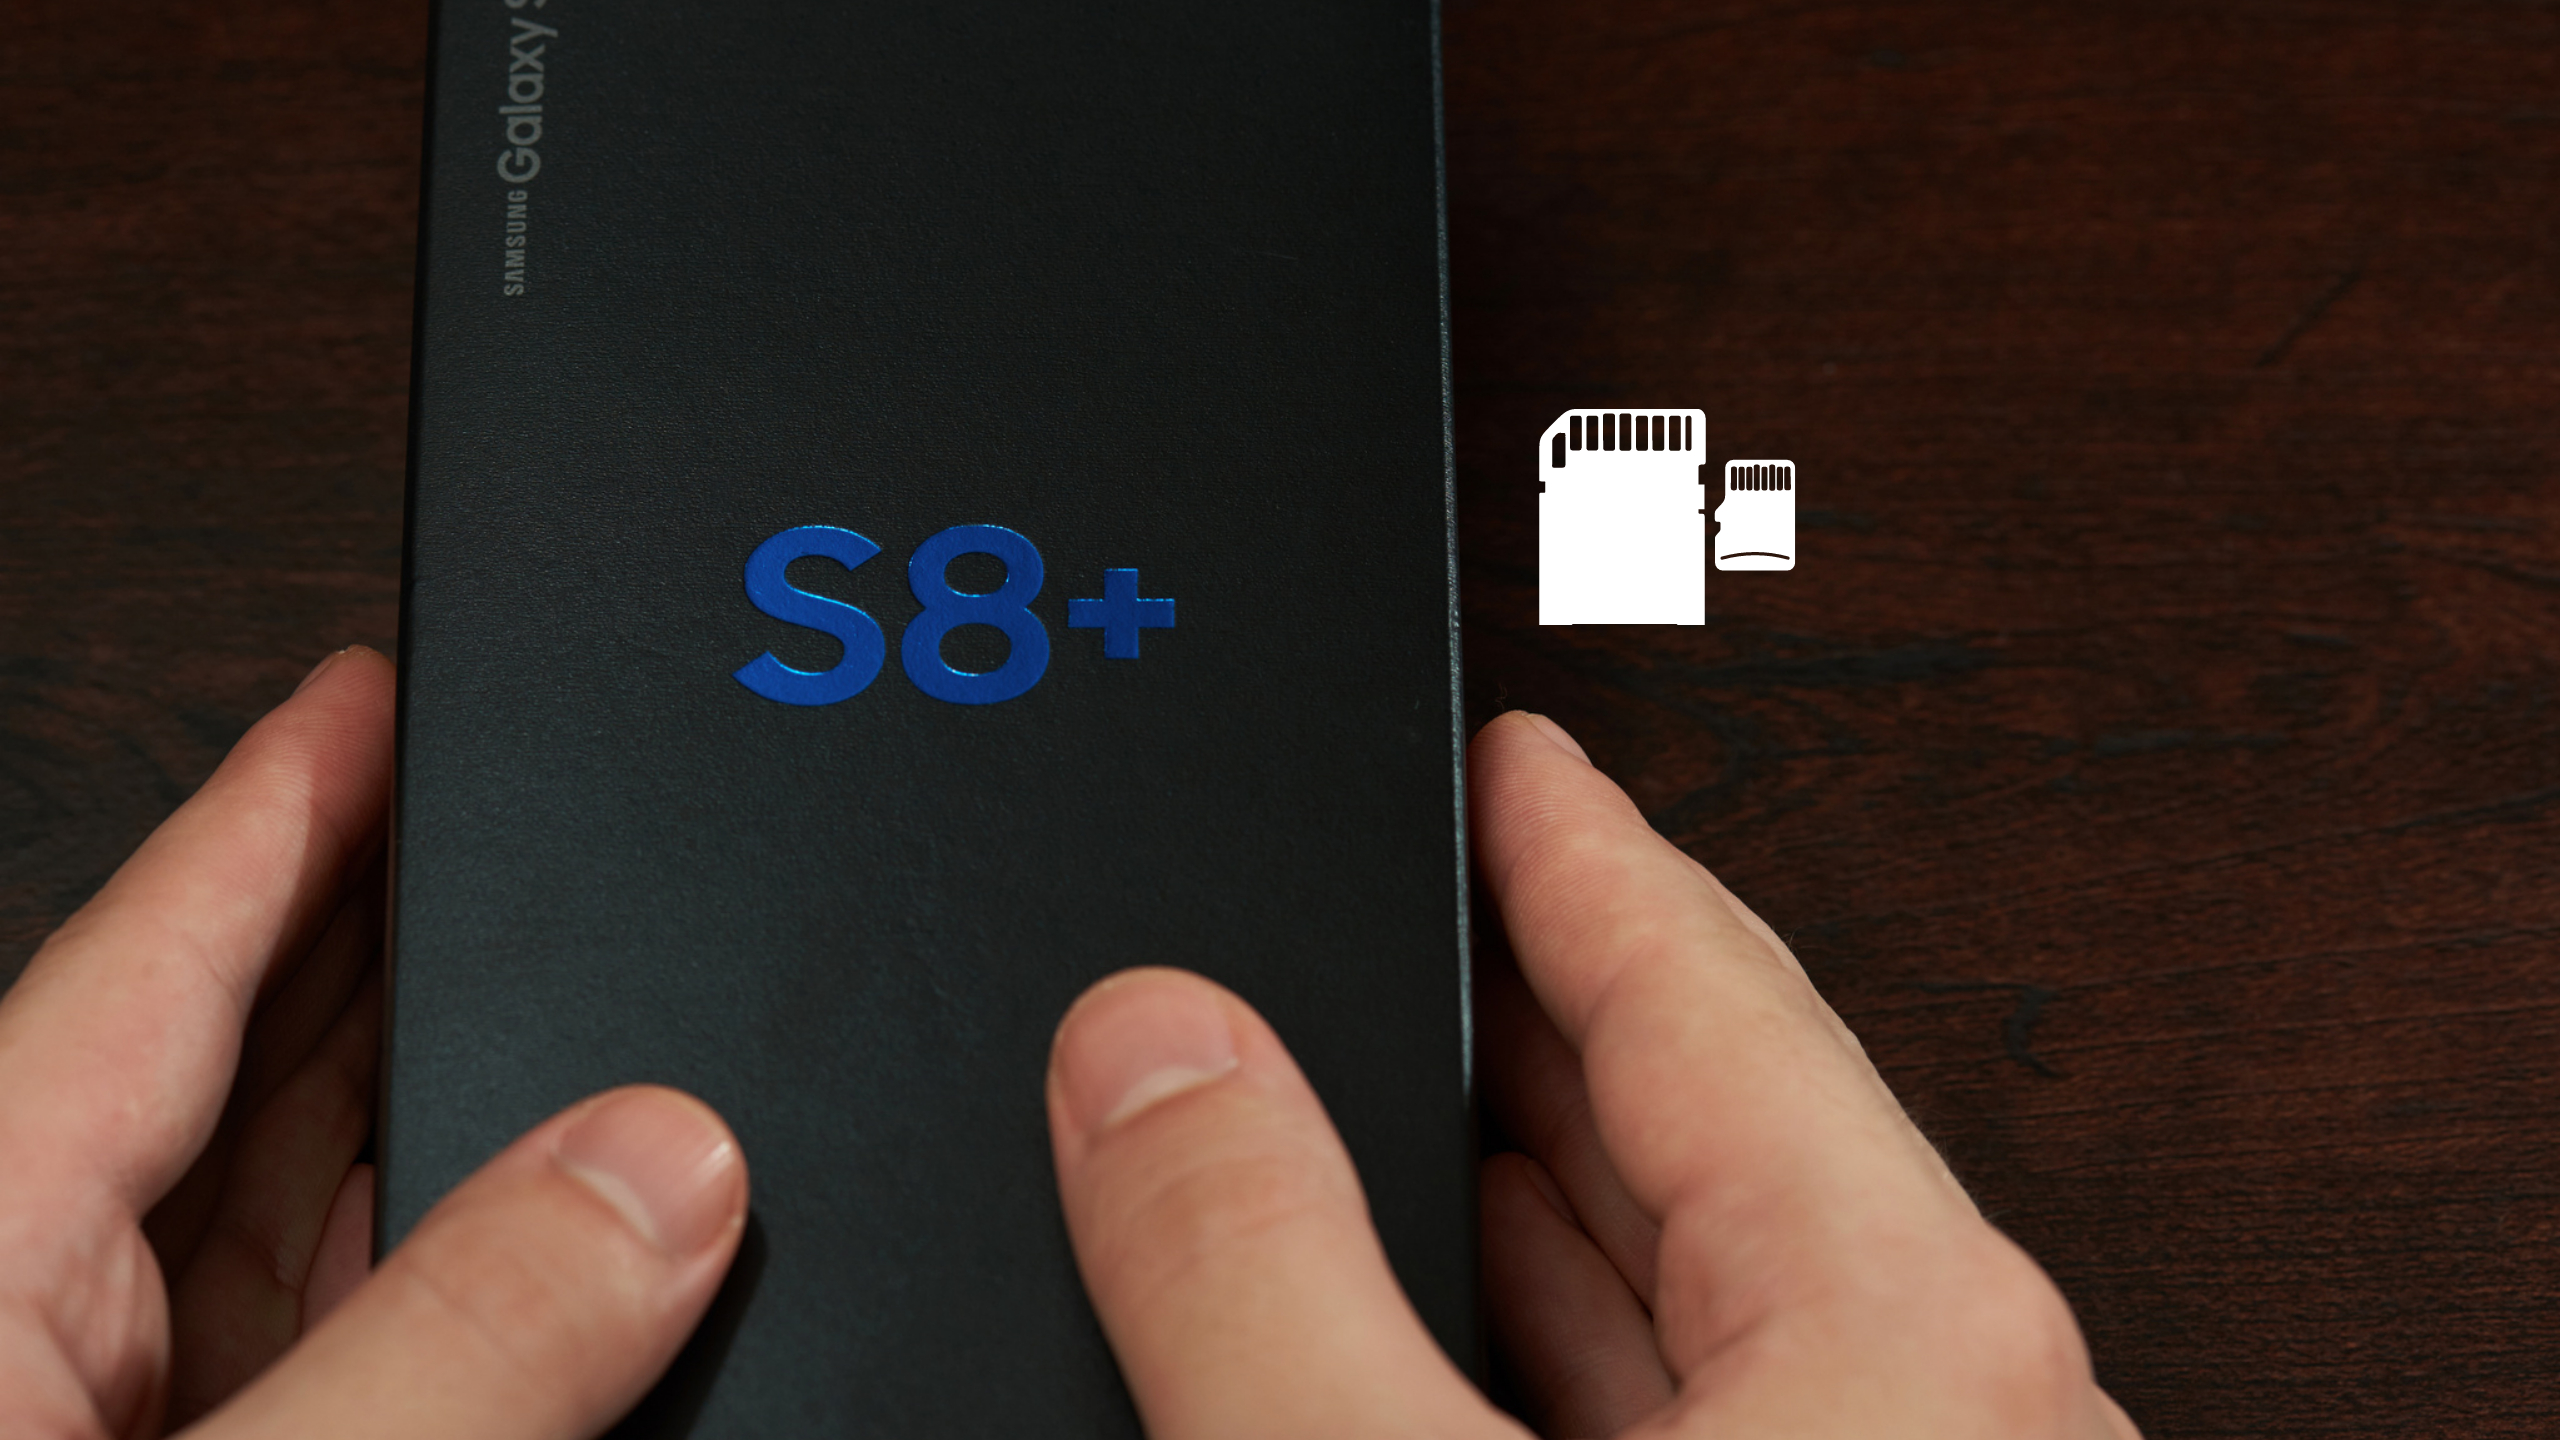 Galaxy S8 with an SD card